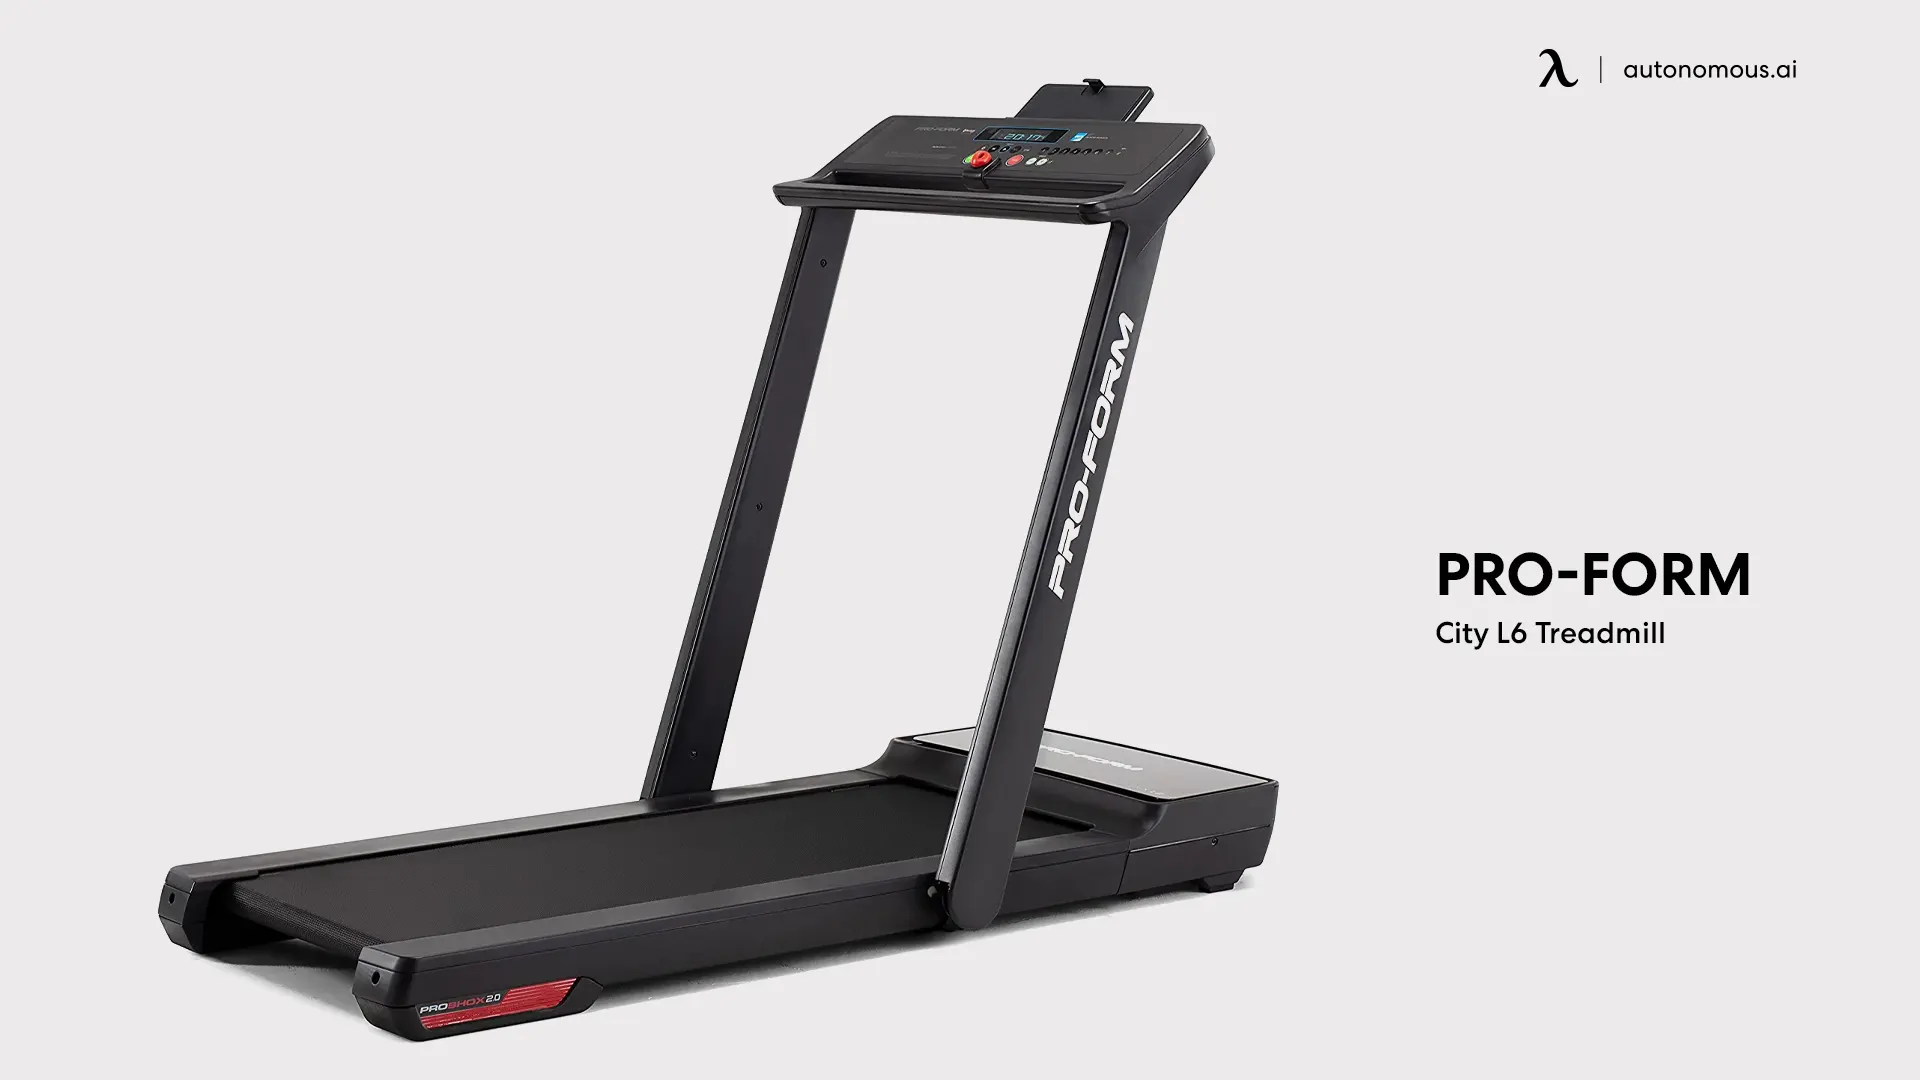 Pro-Form City L6 Treadmill - home running machine